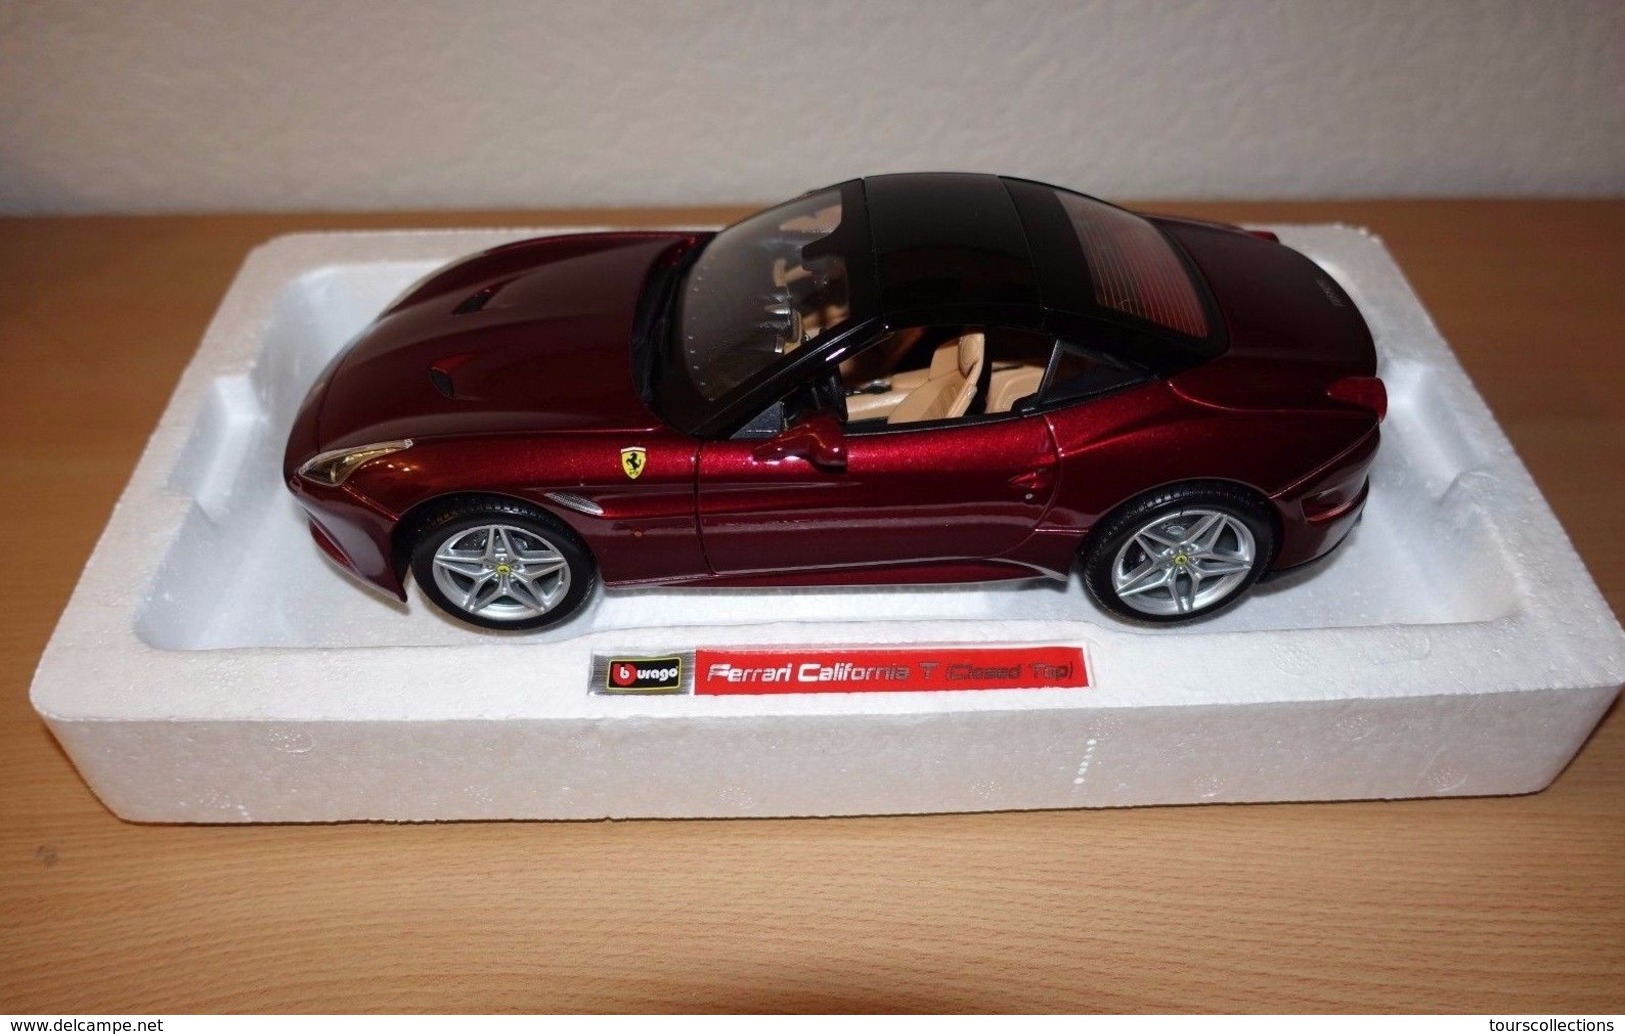 Ferrari California T rouge foncé toit fermé (version luxe de 2015) 1/18 Burago n° 16902